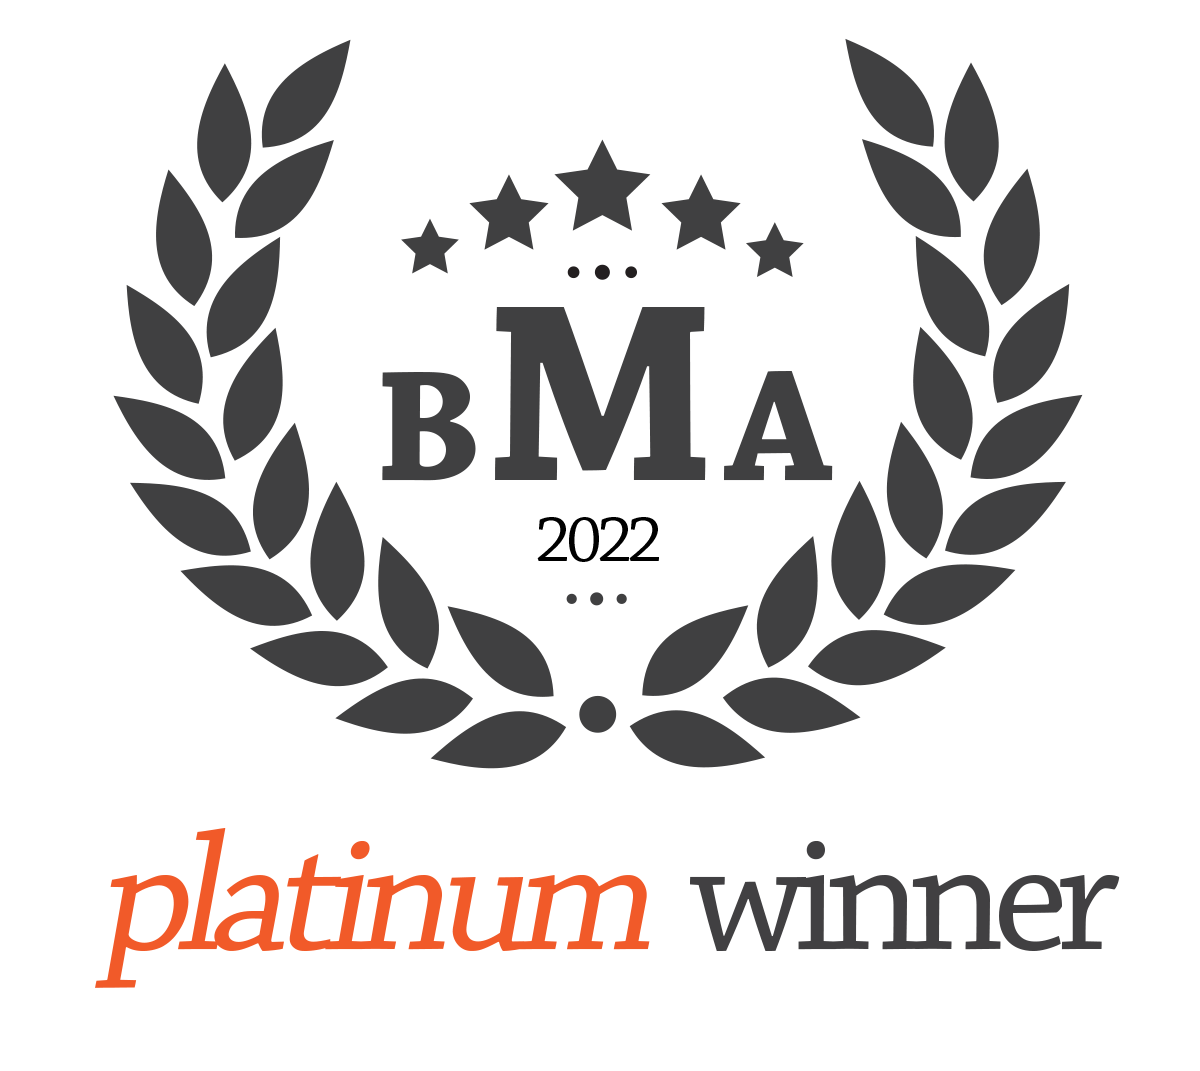 BMA platinum winner